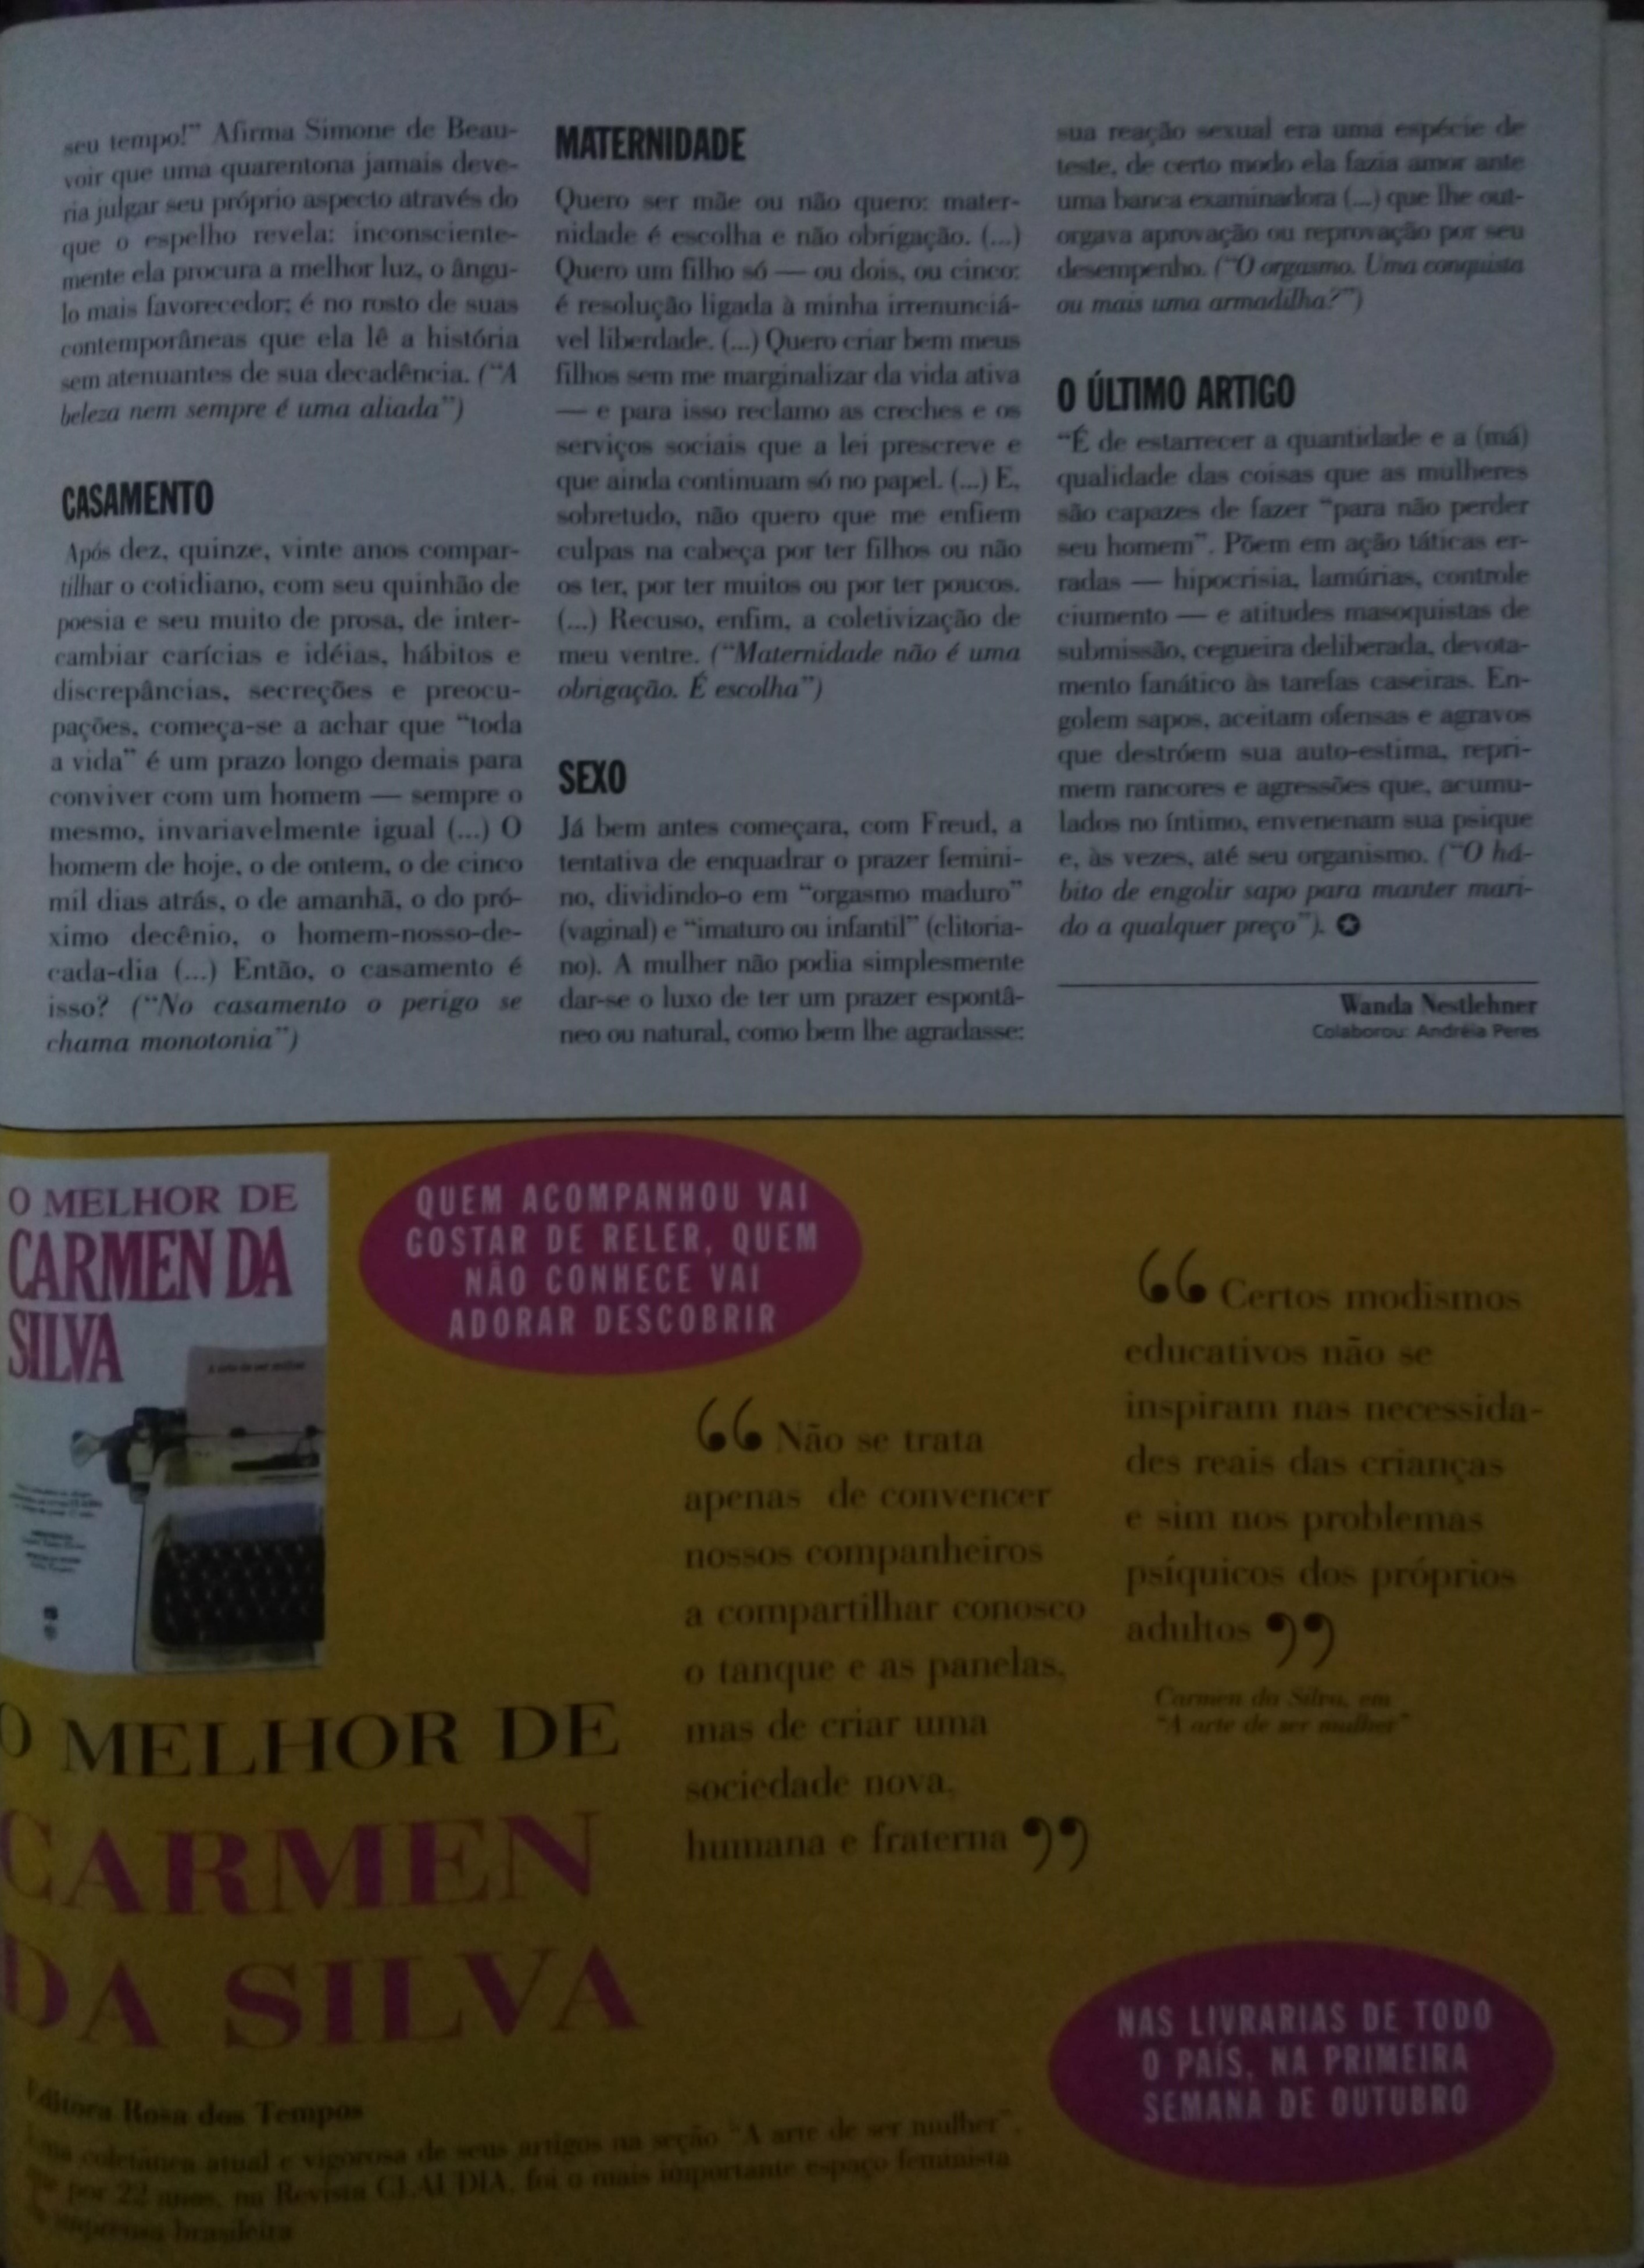 Revista Claudia, nº 397, outubro de 1994. Pg. 215.